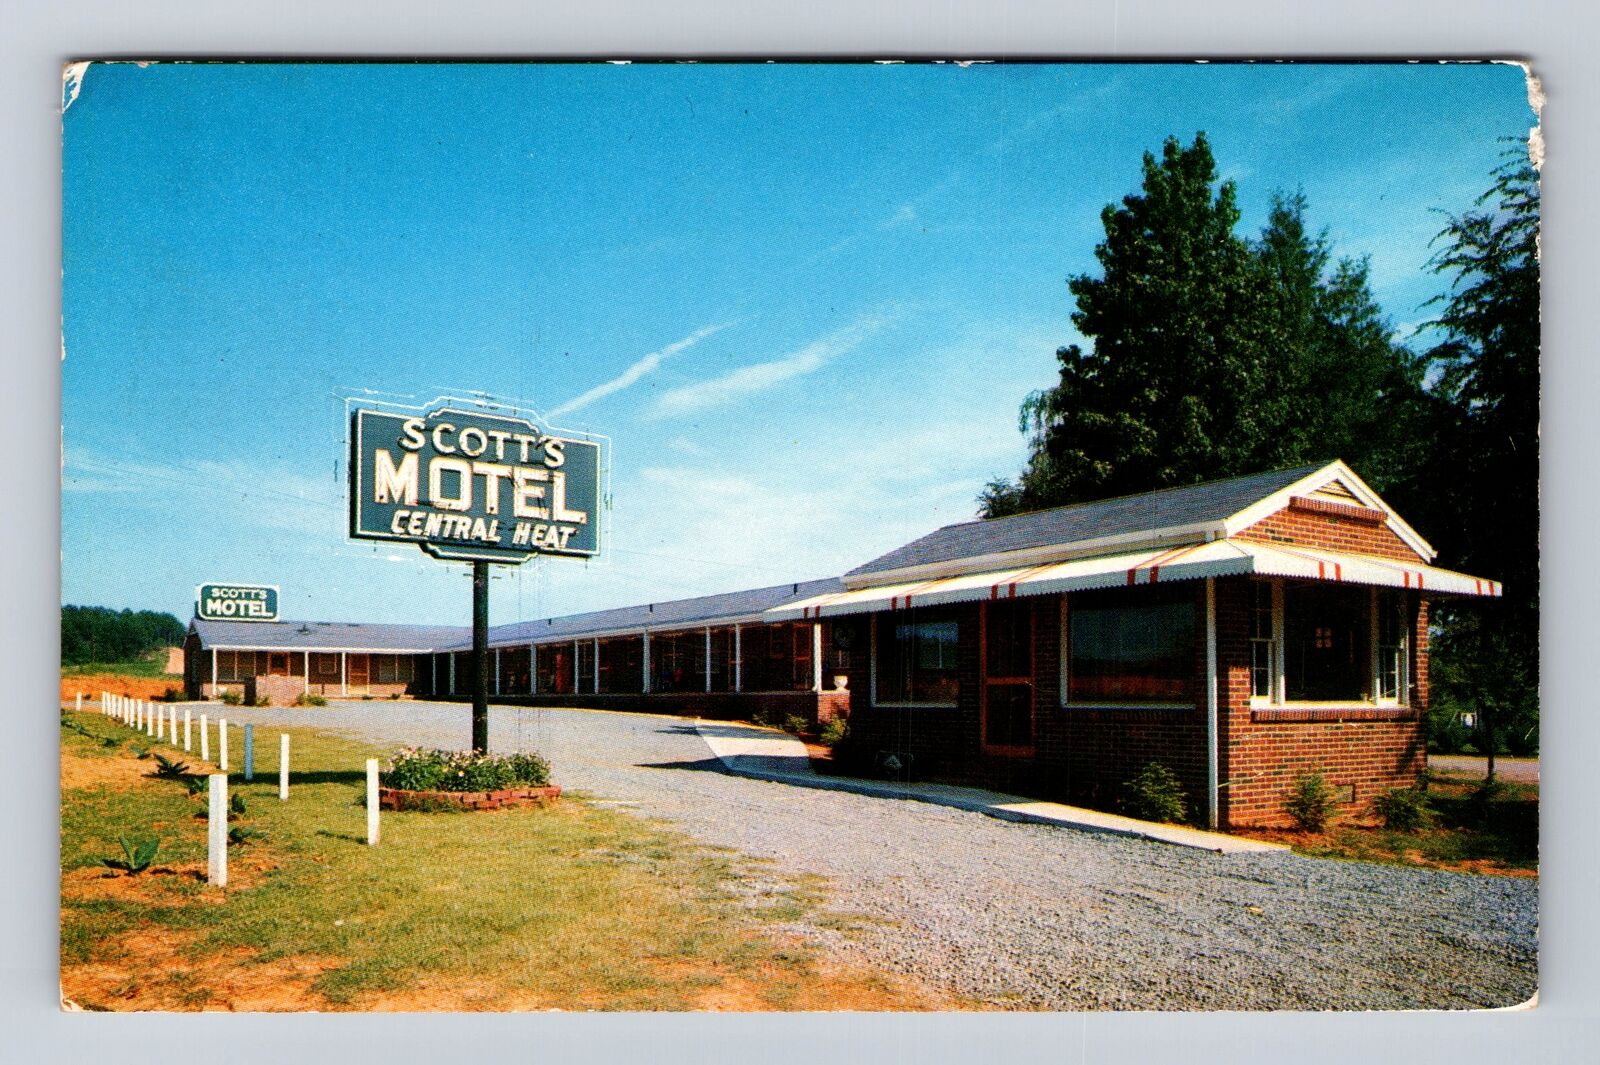 Cartersville GA-Georgia, Scott's Motel, U.S. 41, Antique Vintage Postcard